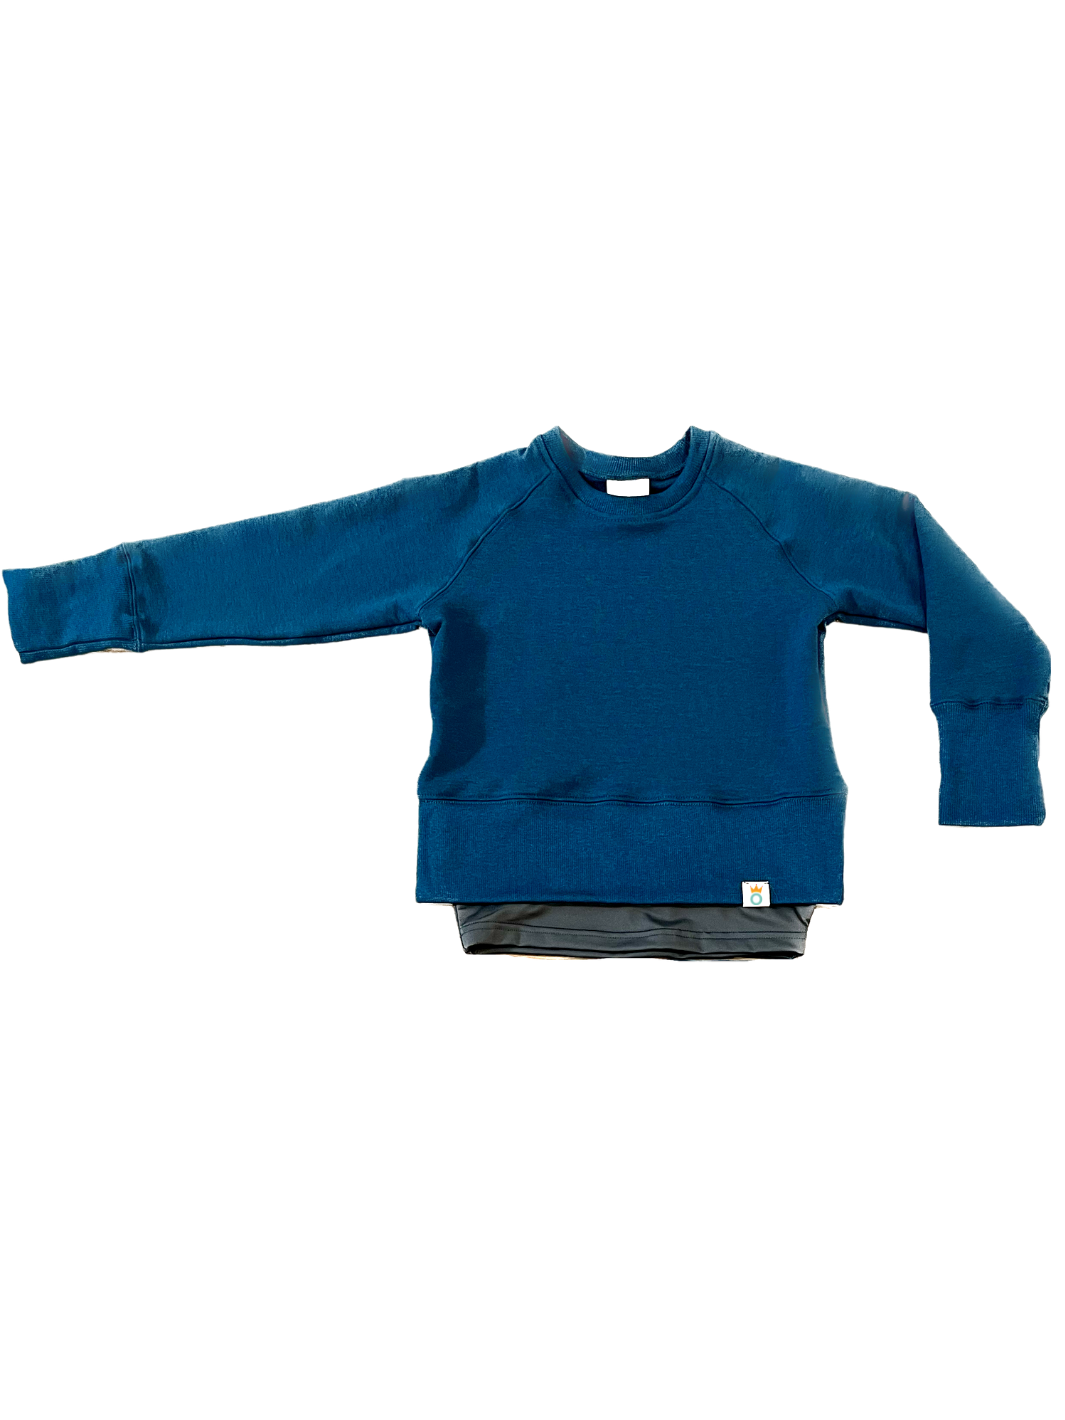 Moroccan Blue Crewneck Sweater